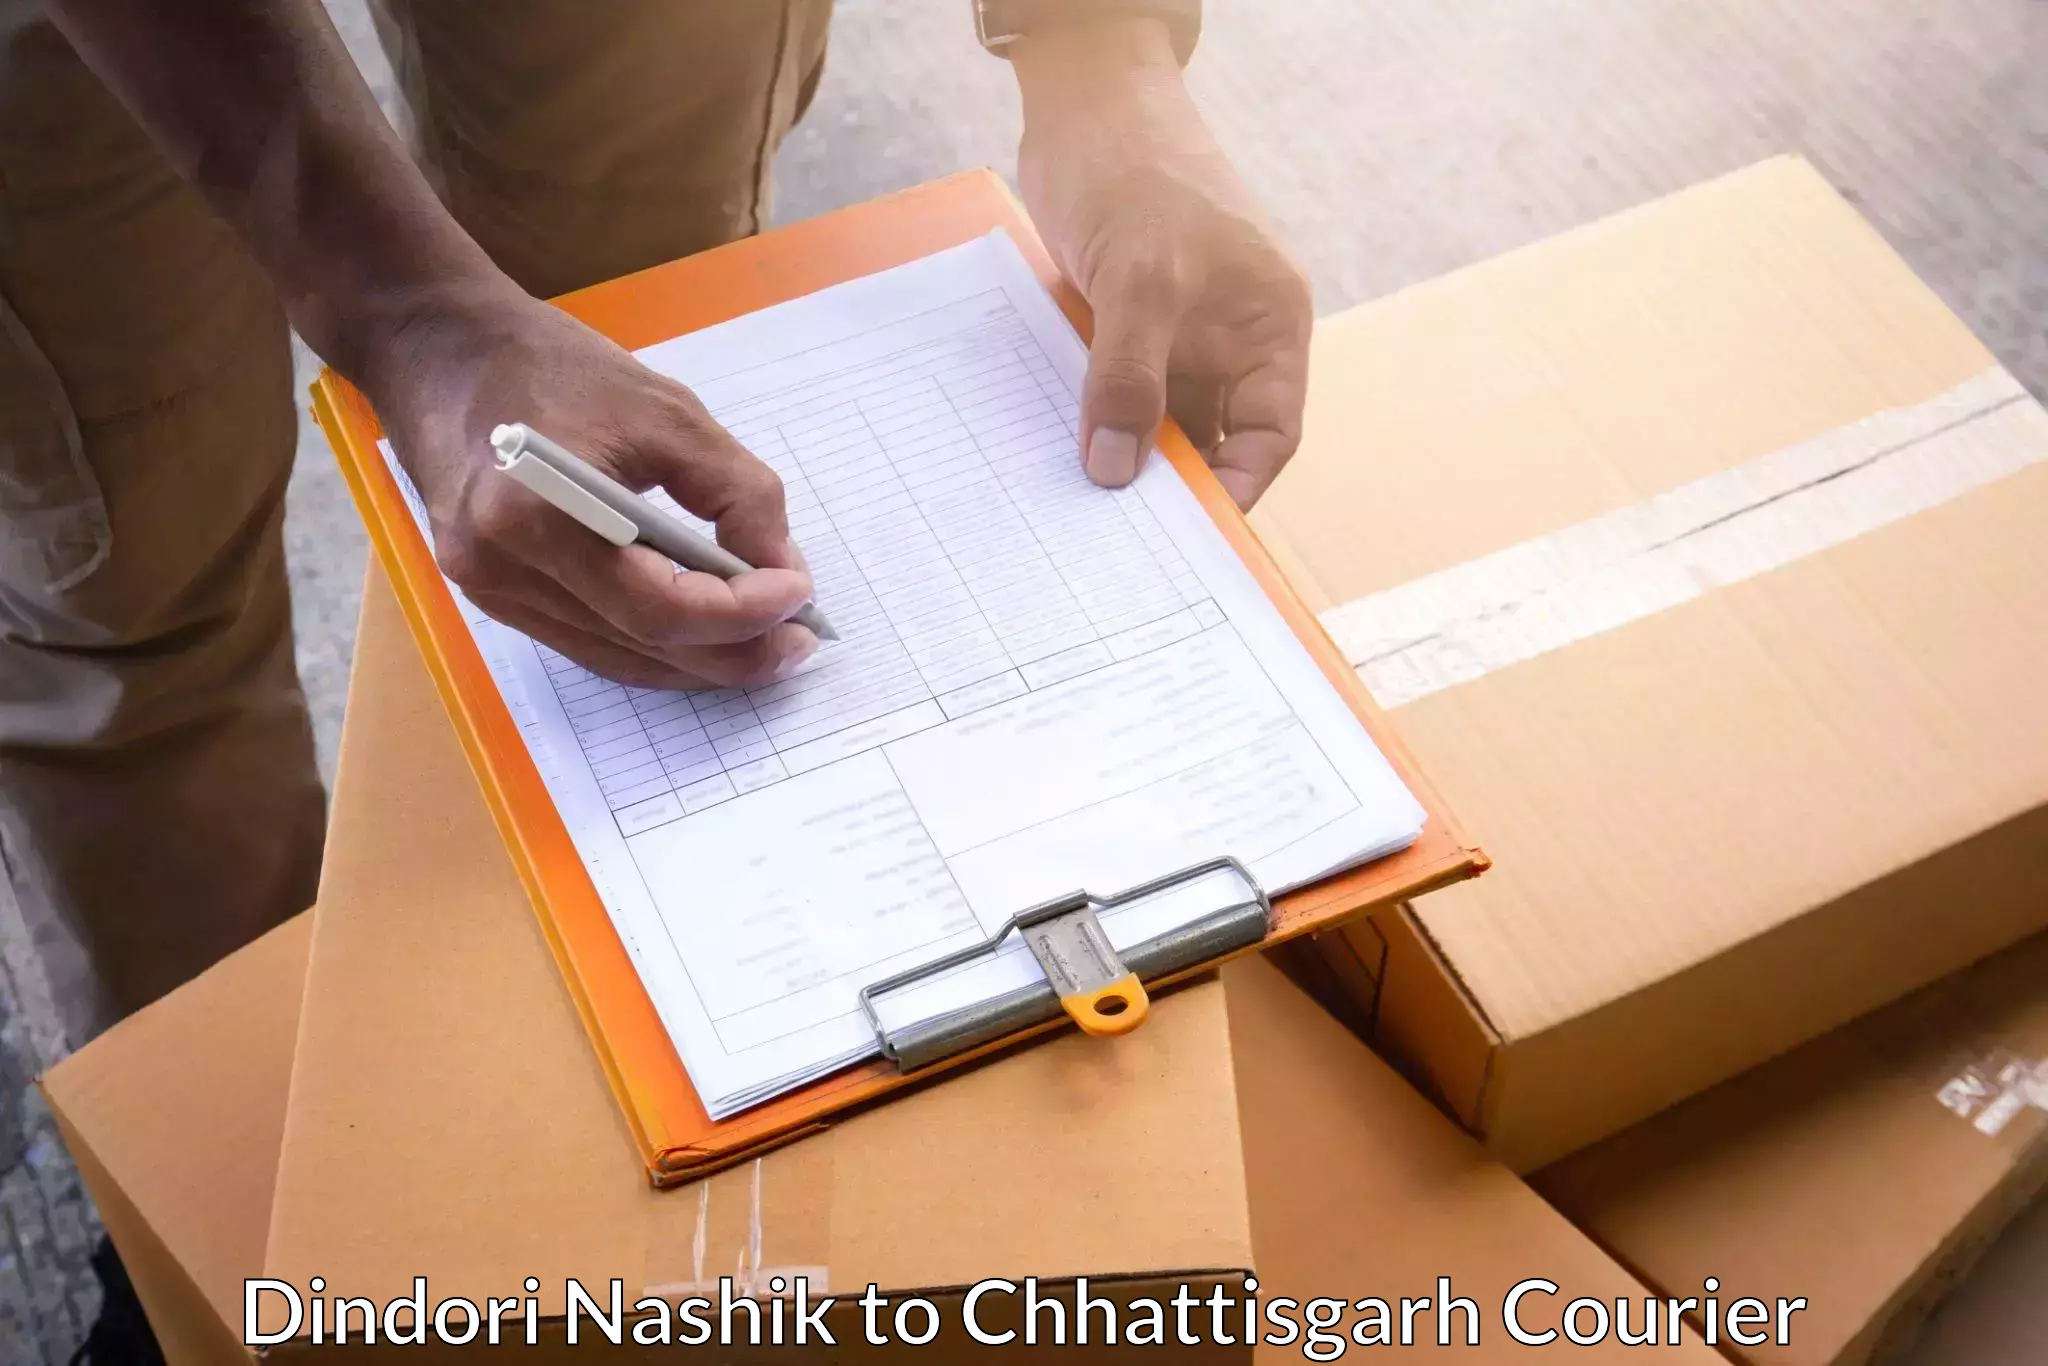 Rapid freight solutions Dindori Nashik to Chhattisgarh